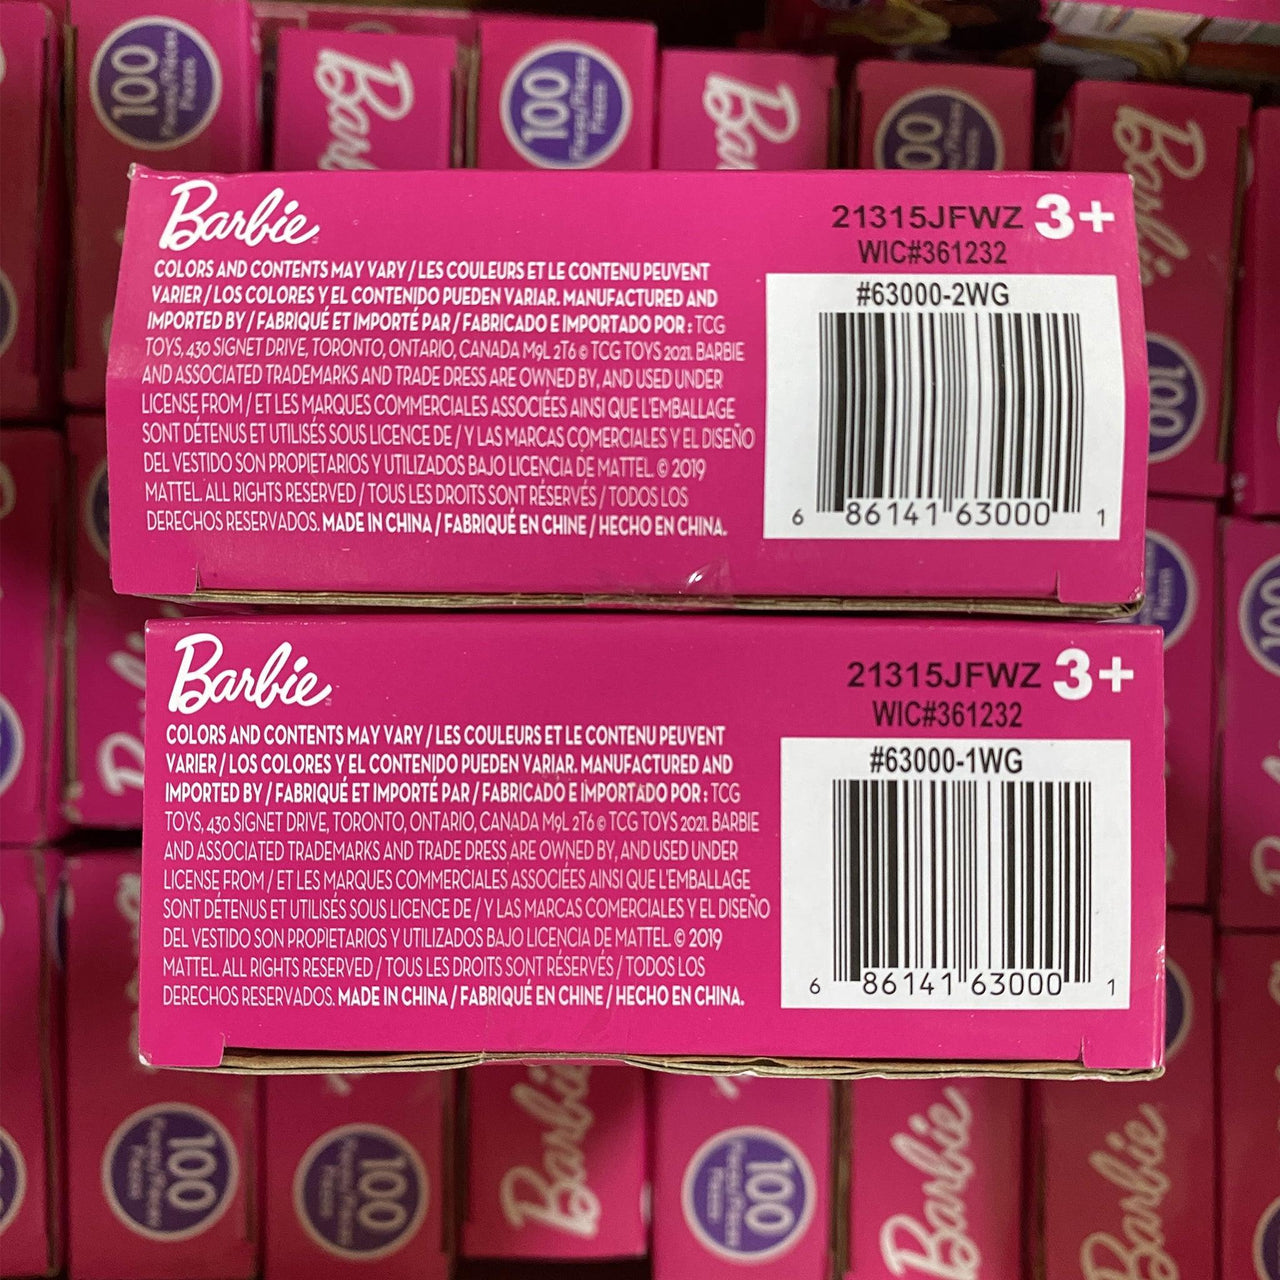 Barbie Puzzles Assorted (35 Pcs Box) - Discount Wholesalers Inc